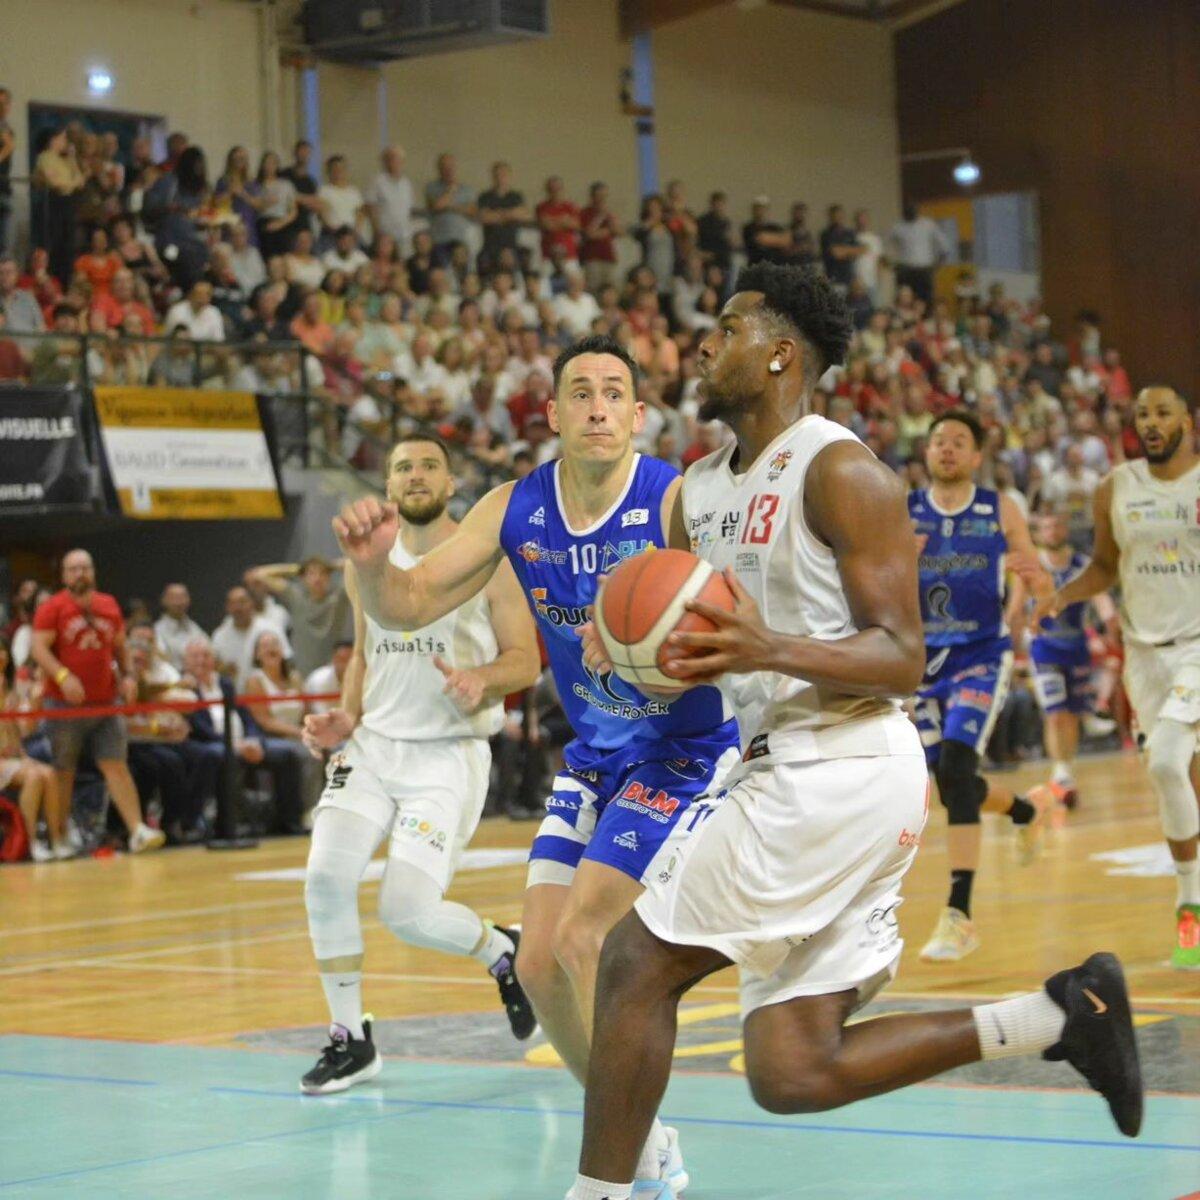 La montée de l’ALL Jura Basket en Nationale 1 en danger